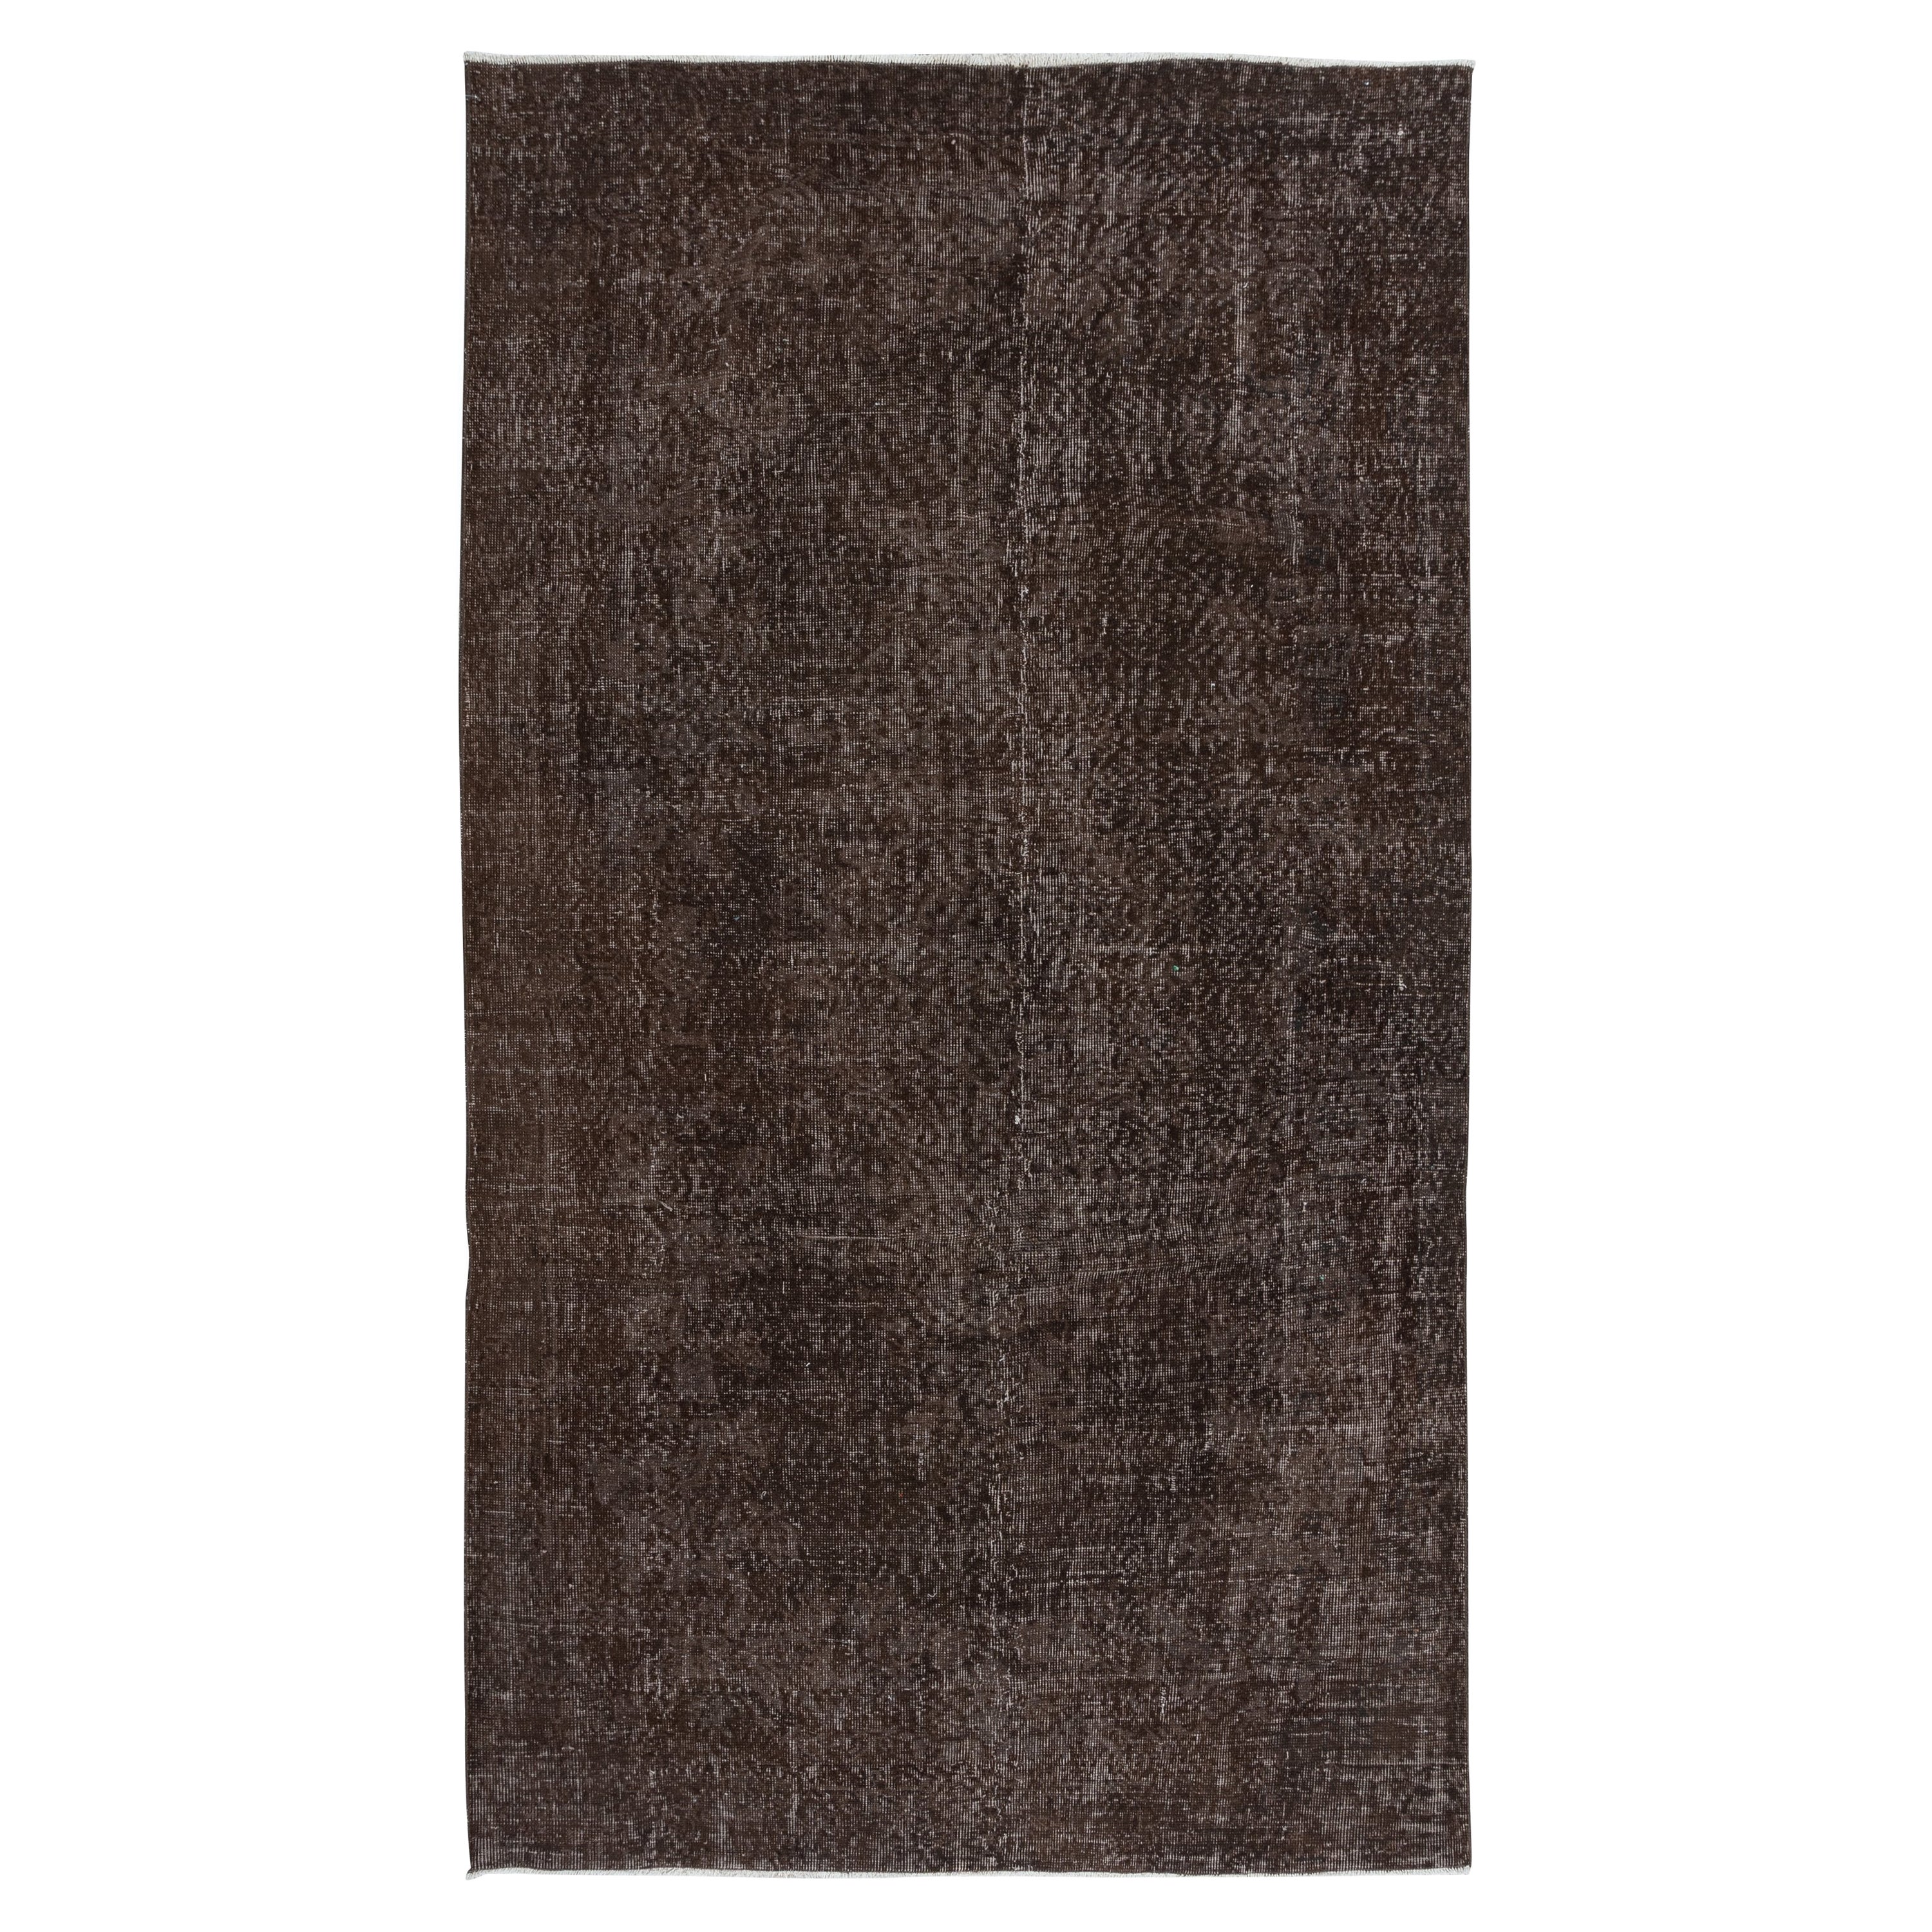 5.2x9.2 Ft Brown Handmade Turkish Area Rug, Bohem Eclectic Room Size Carpet For Sale